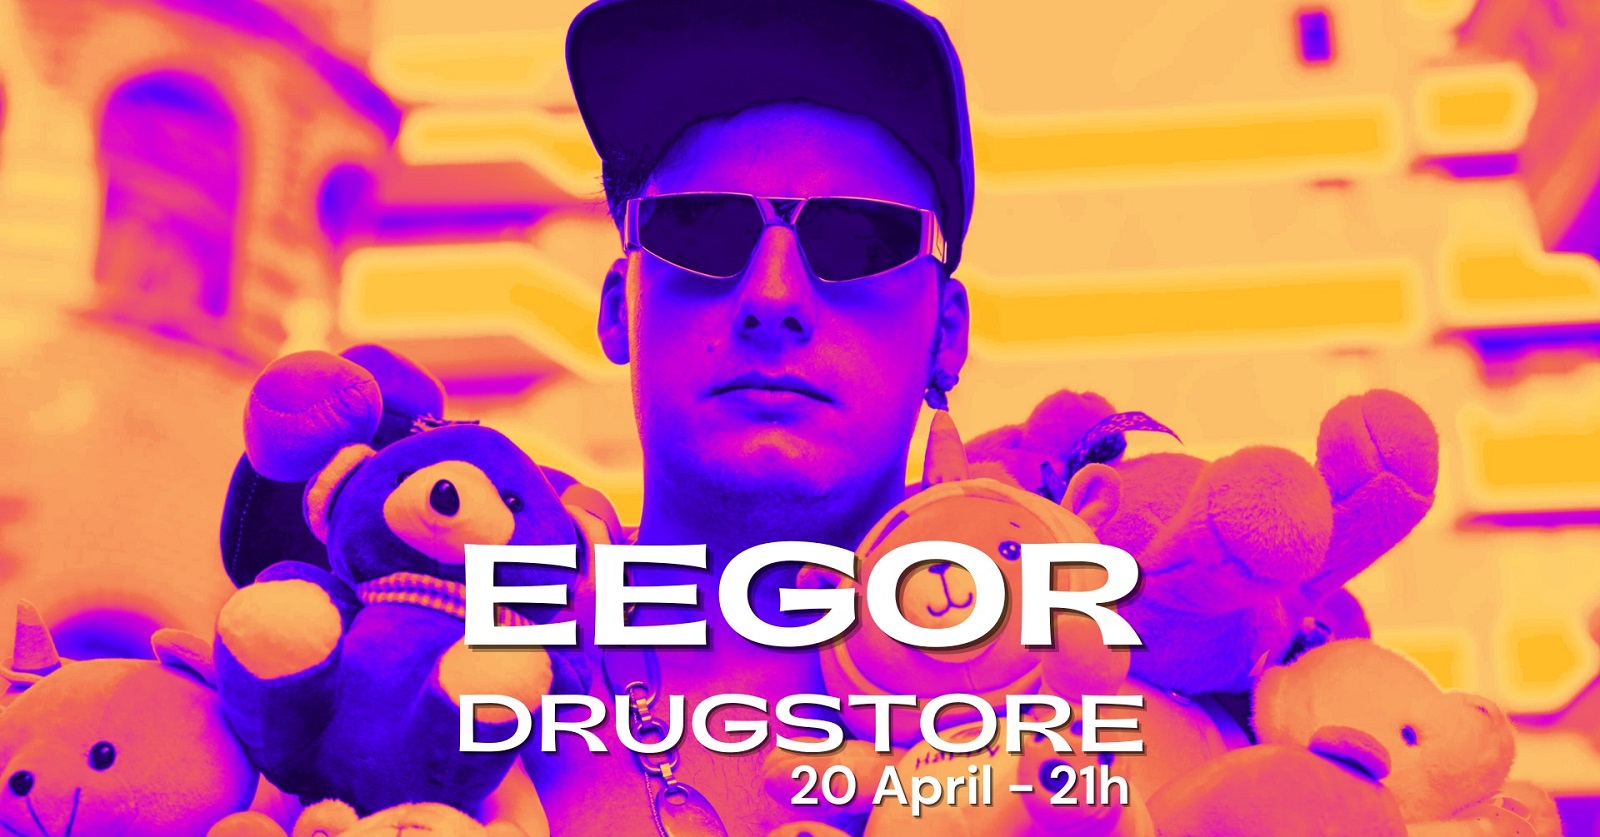 Eegor nastupa uživo u klubu Drugstore